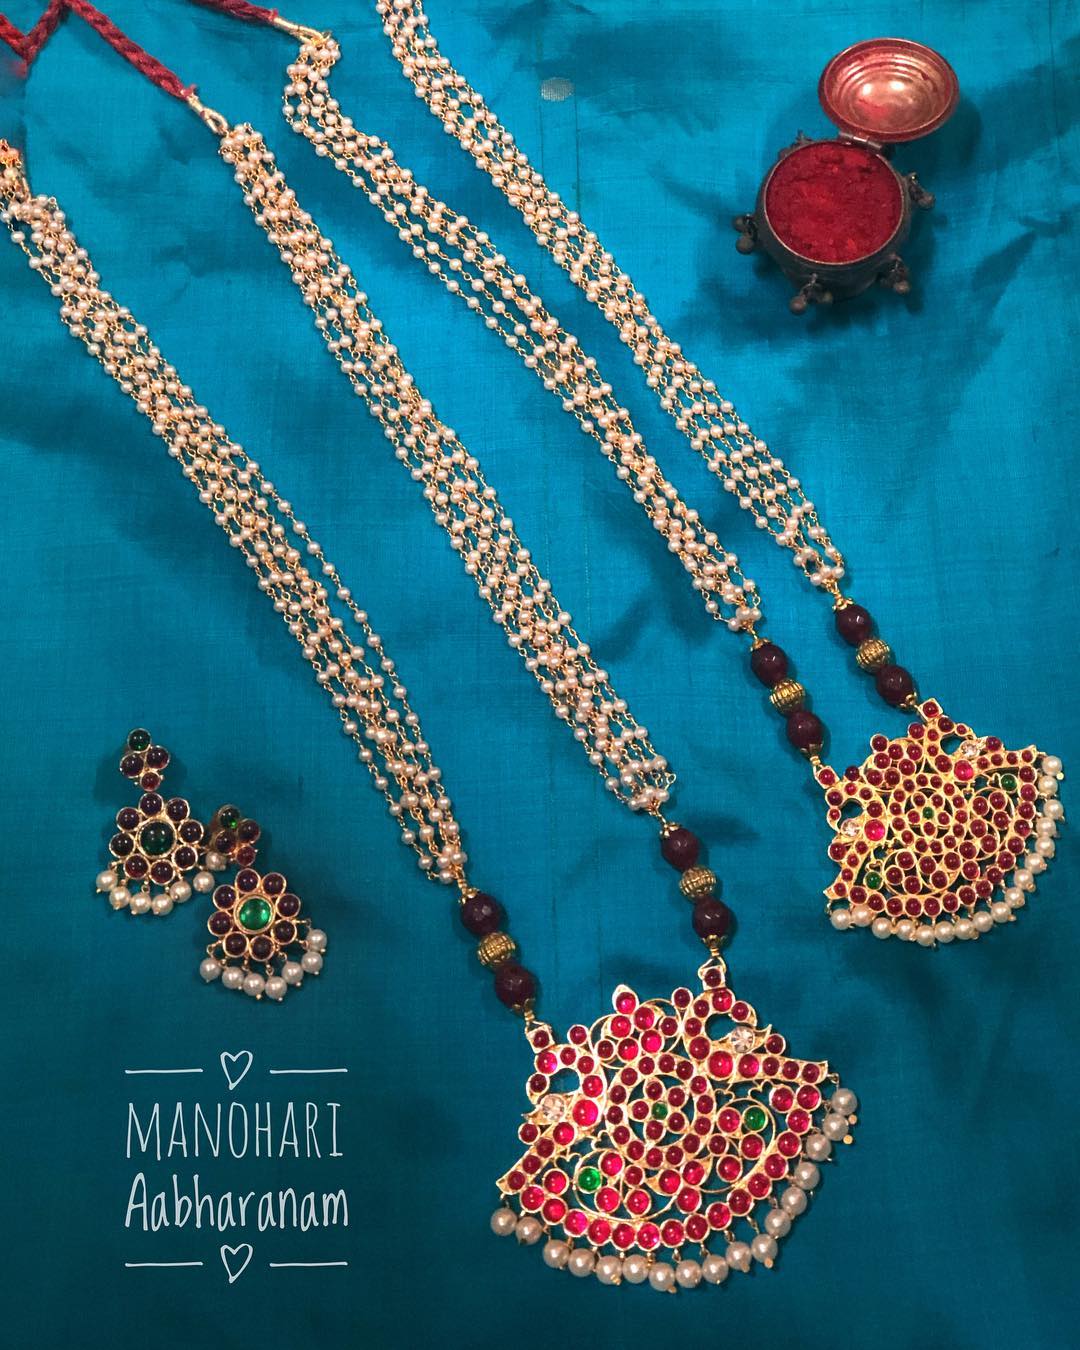 Precious Manohari Necklace From Abharanam